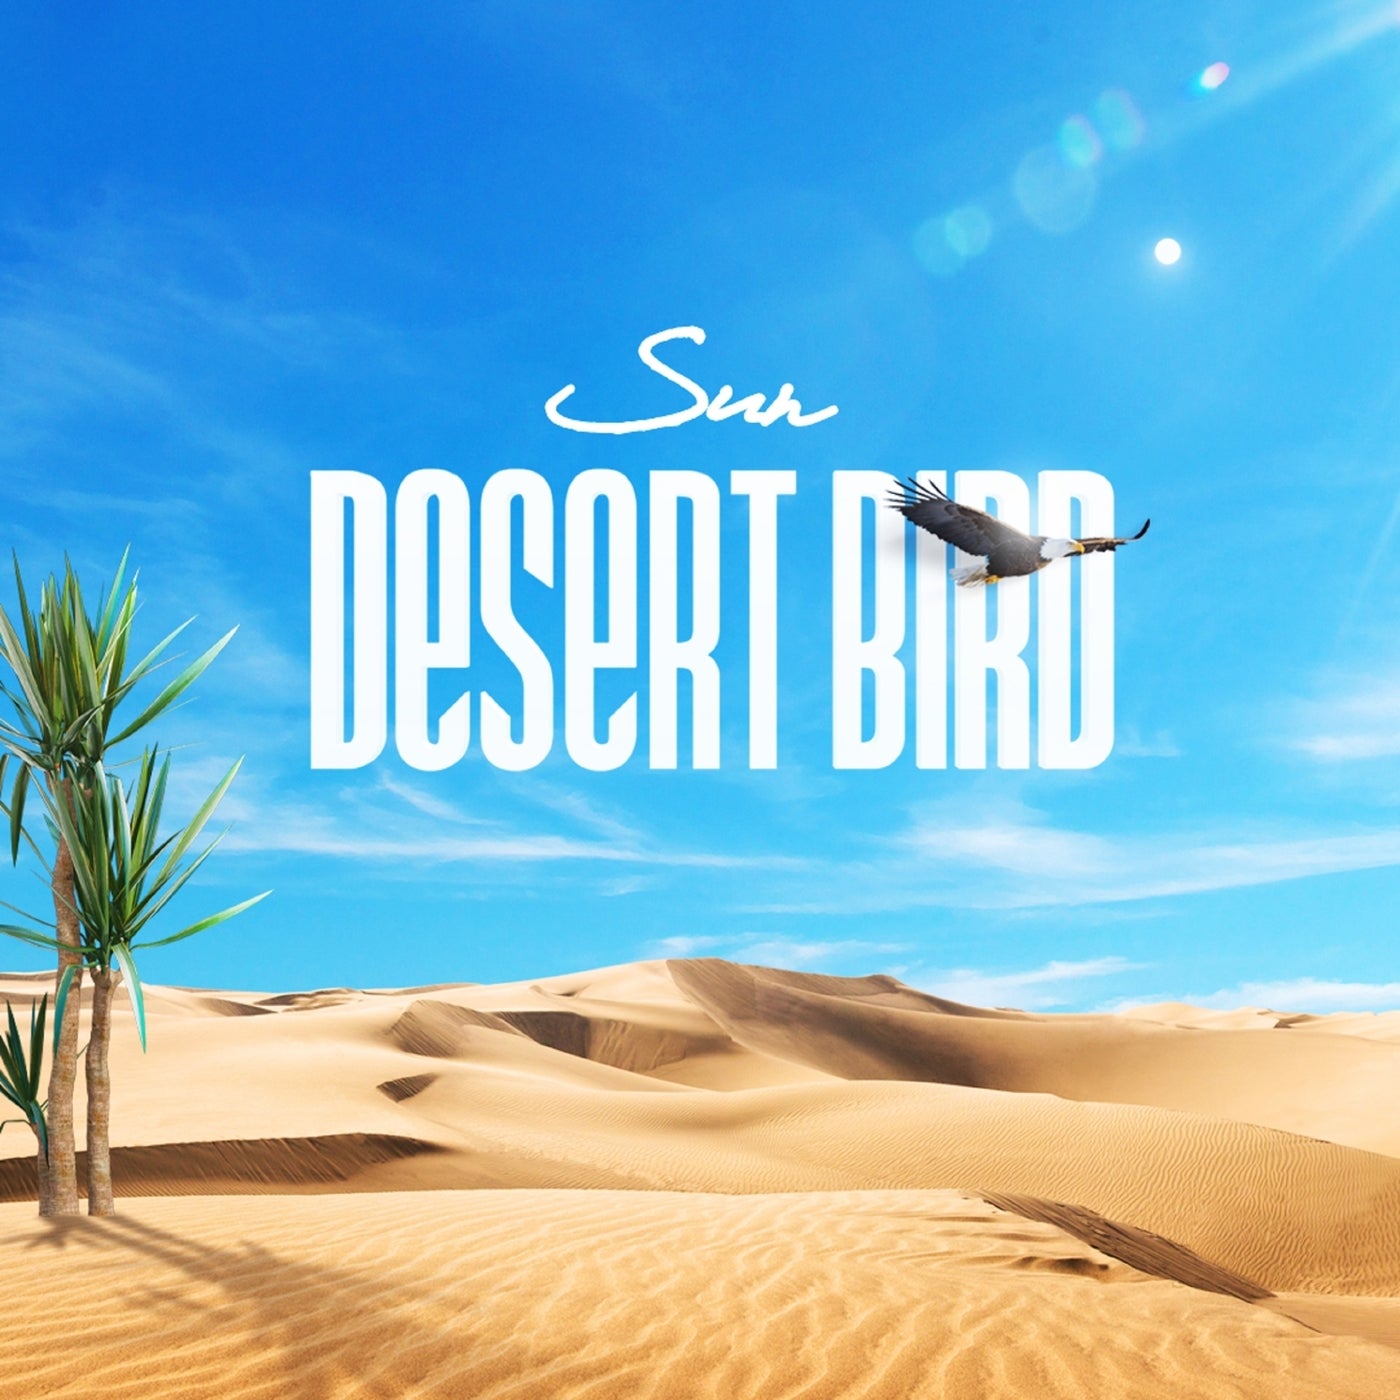 Desert Bird